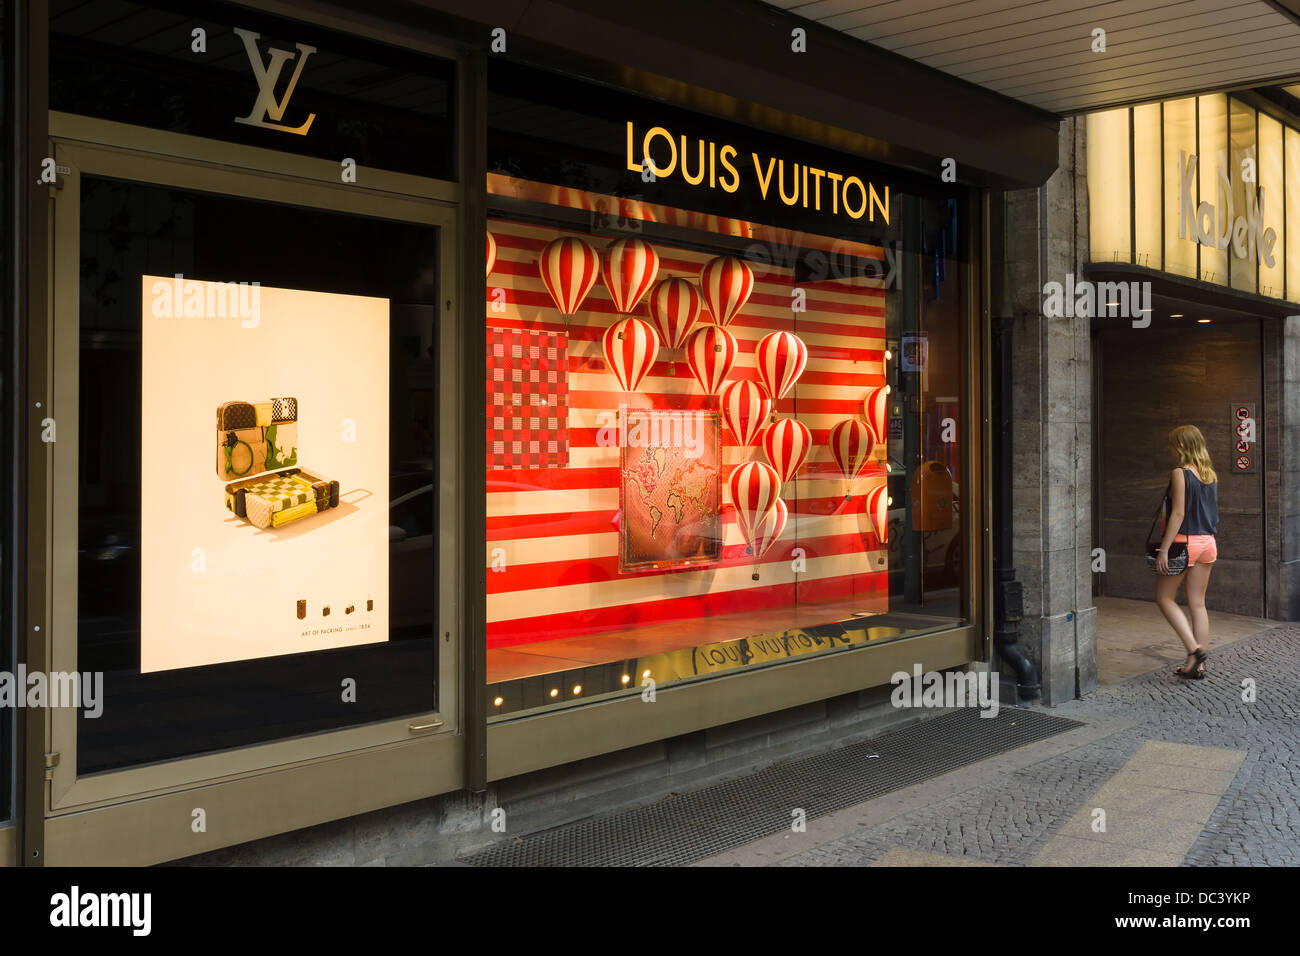 Love these pictures via @gofutureny ❤️ #louisvuitton  #louisvuittoninternational